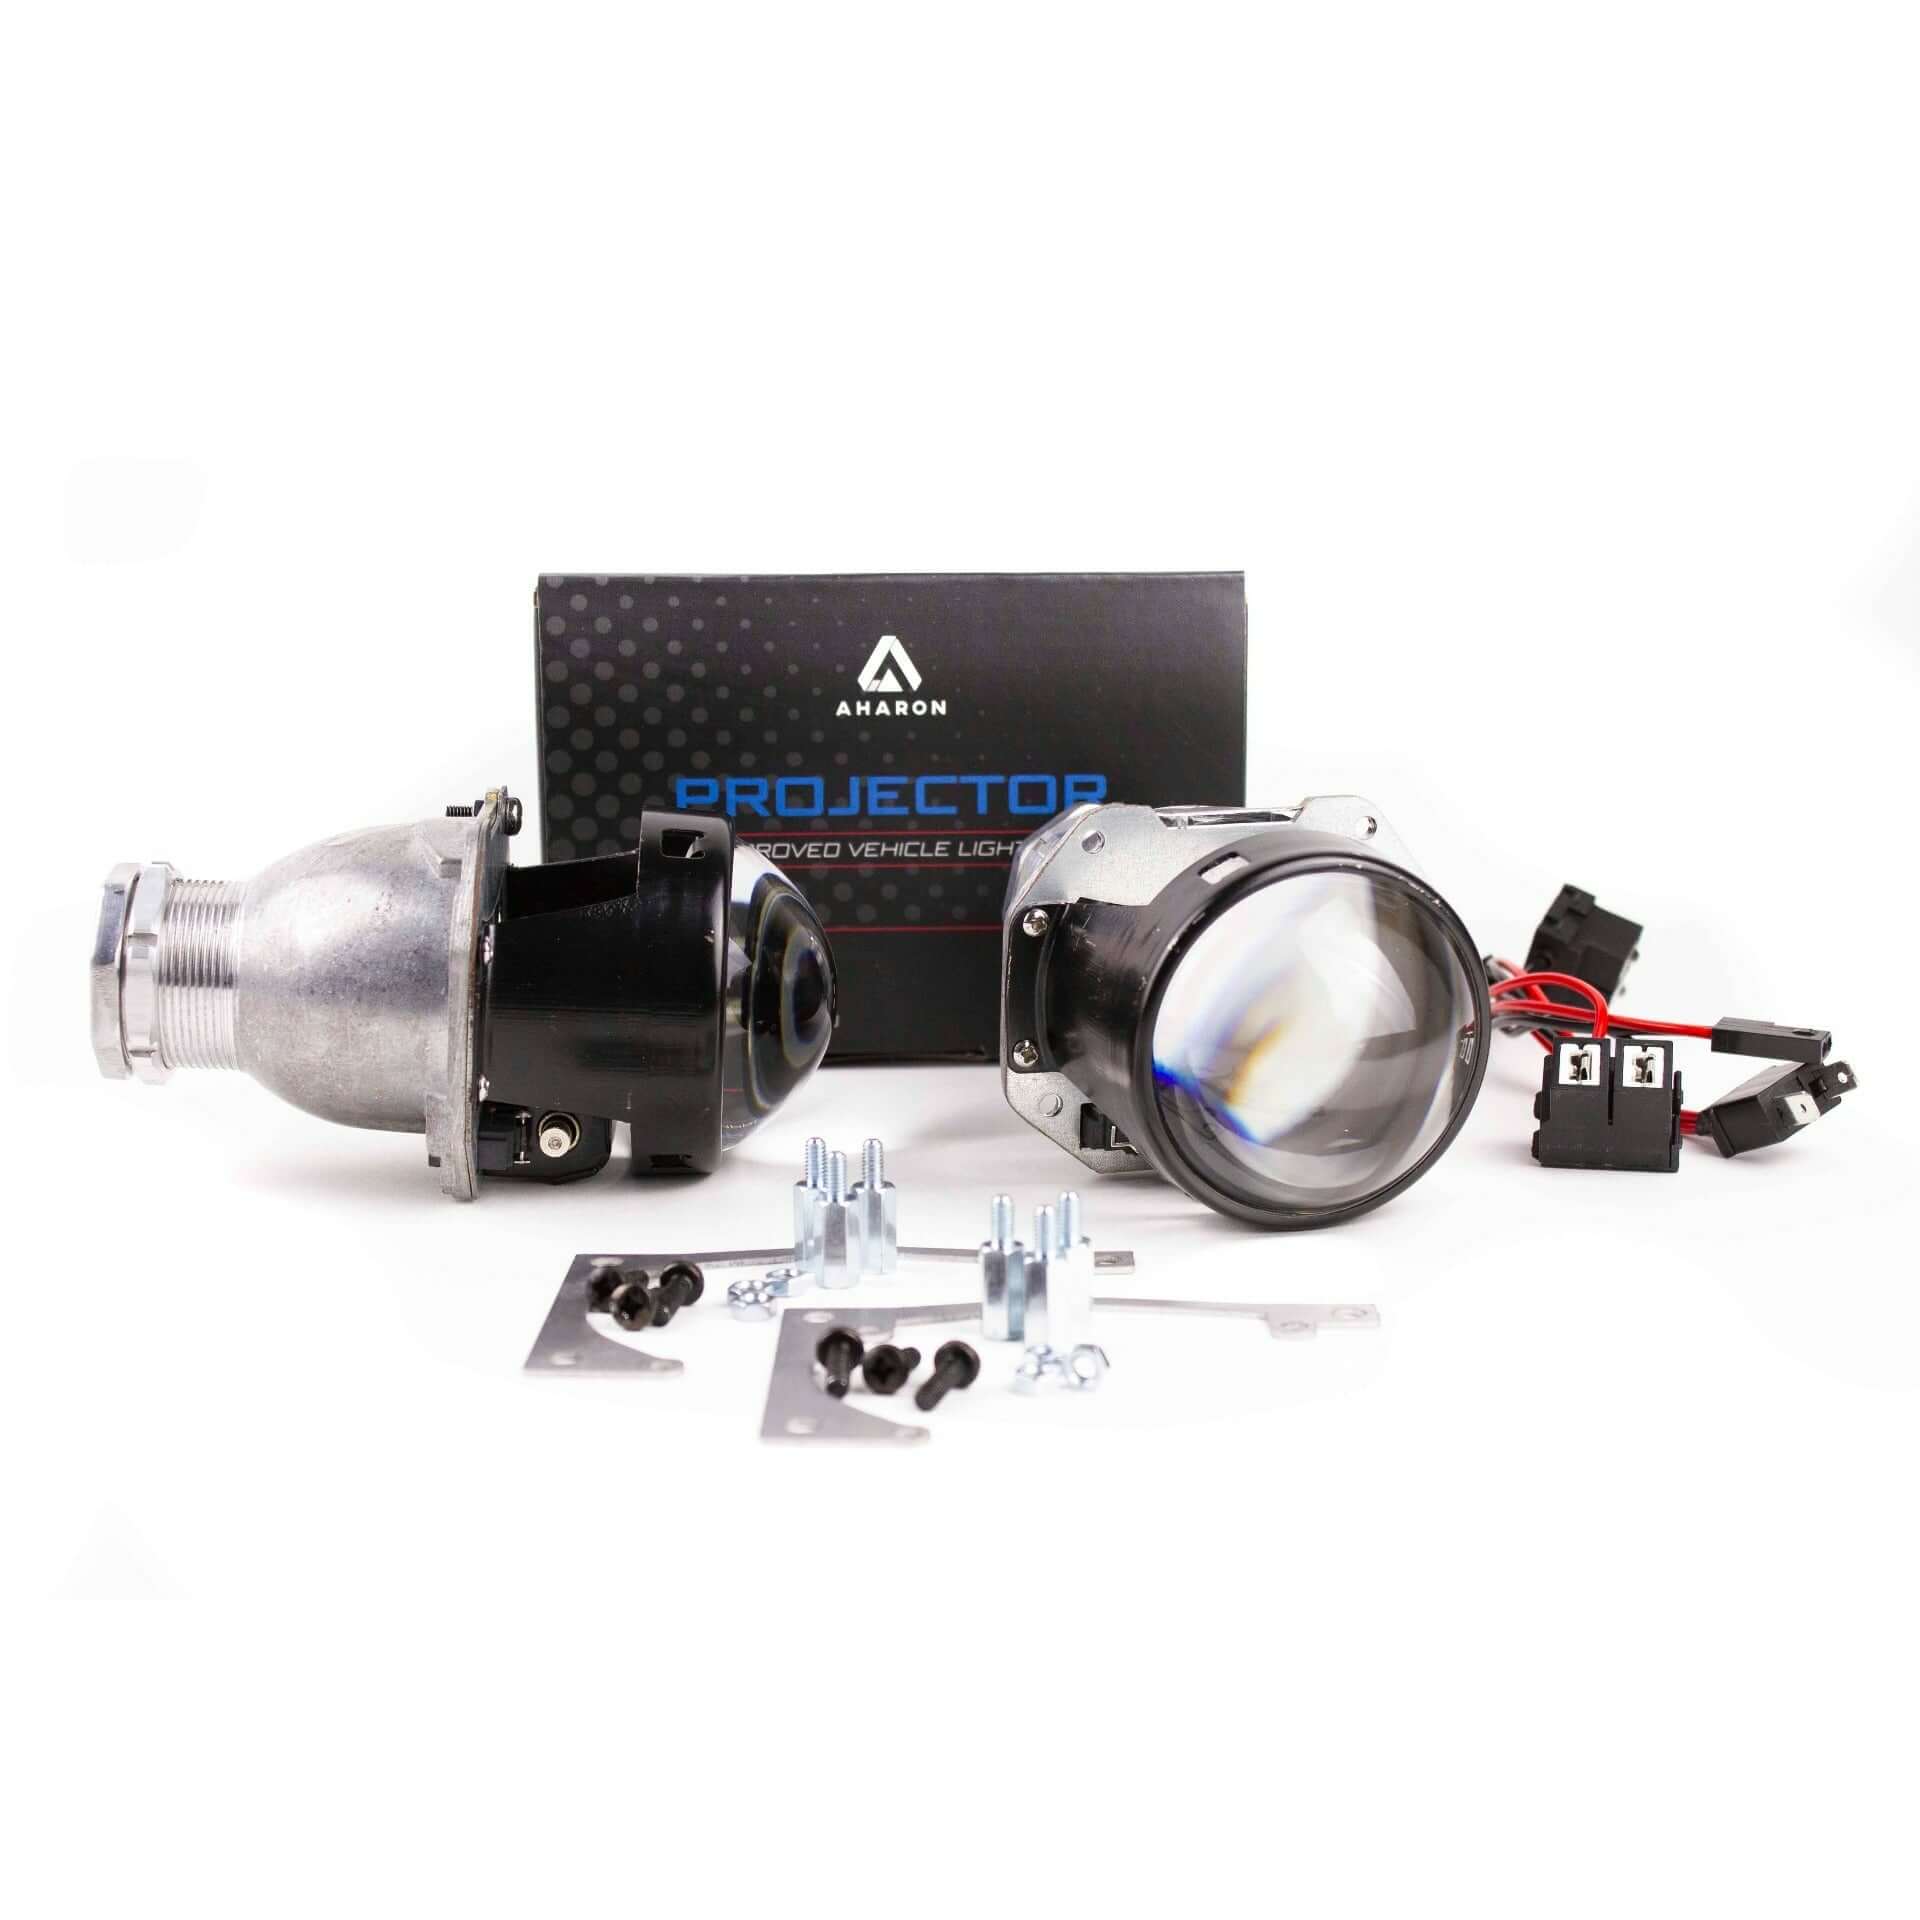 Mazda 6 02-07 bi-xenon HID headlight repair & upgrade kit for xenon HID headlights